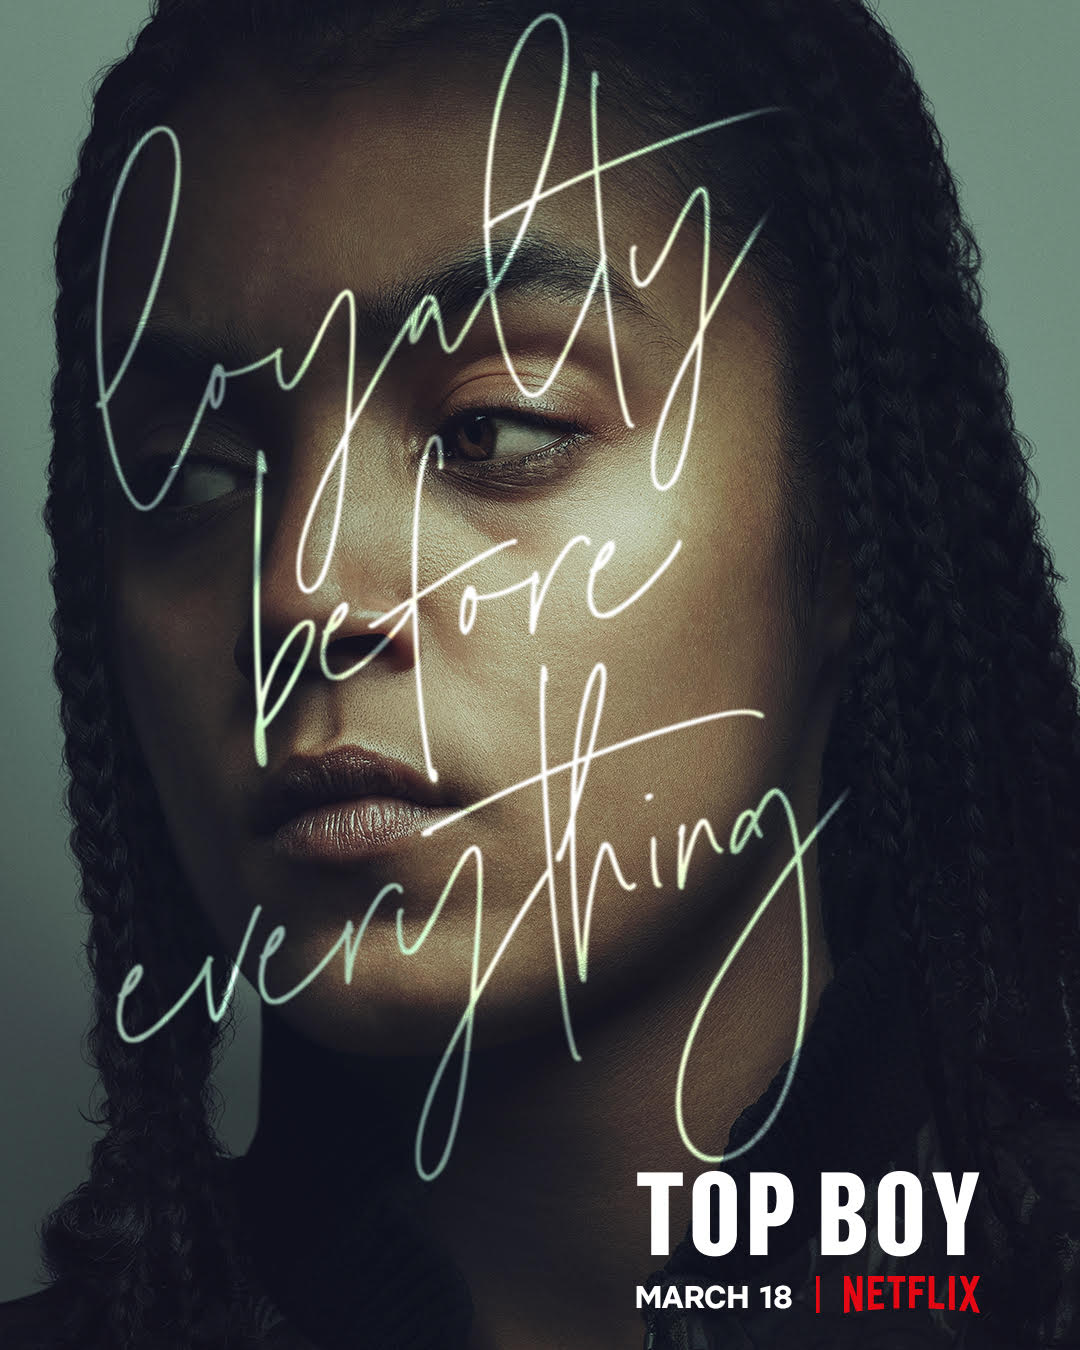 ‘Top Boy’ starring Jasmine Jobson